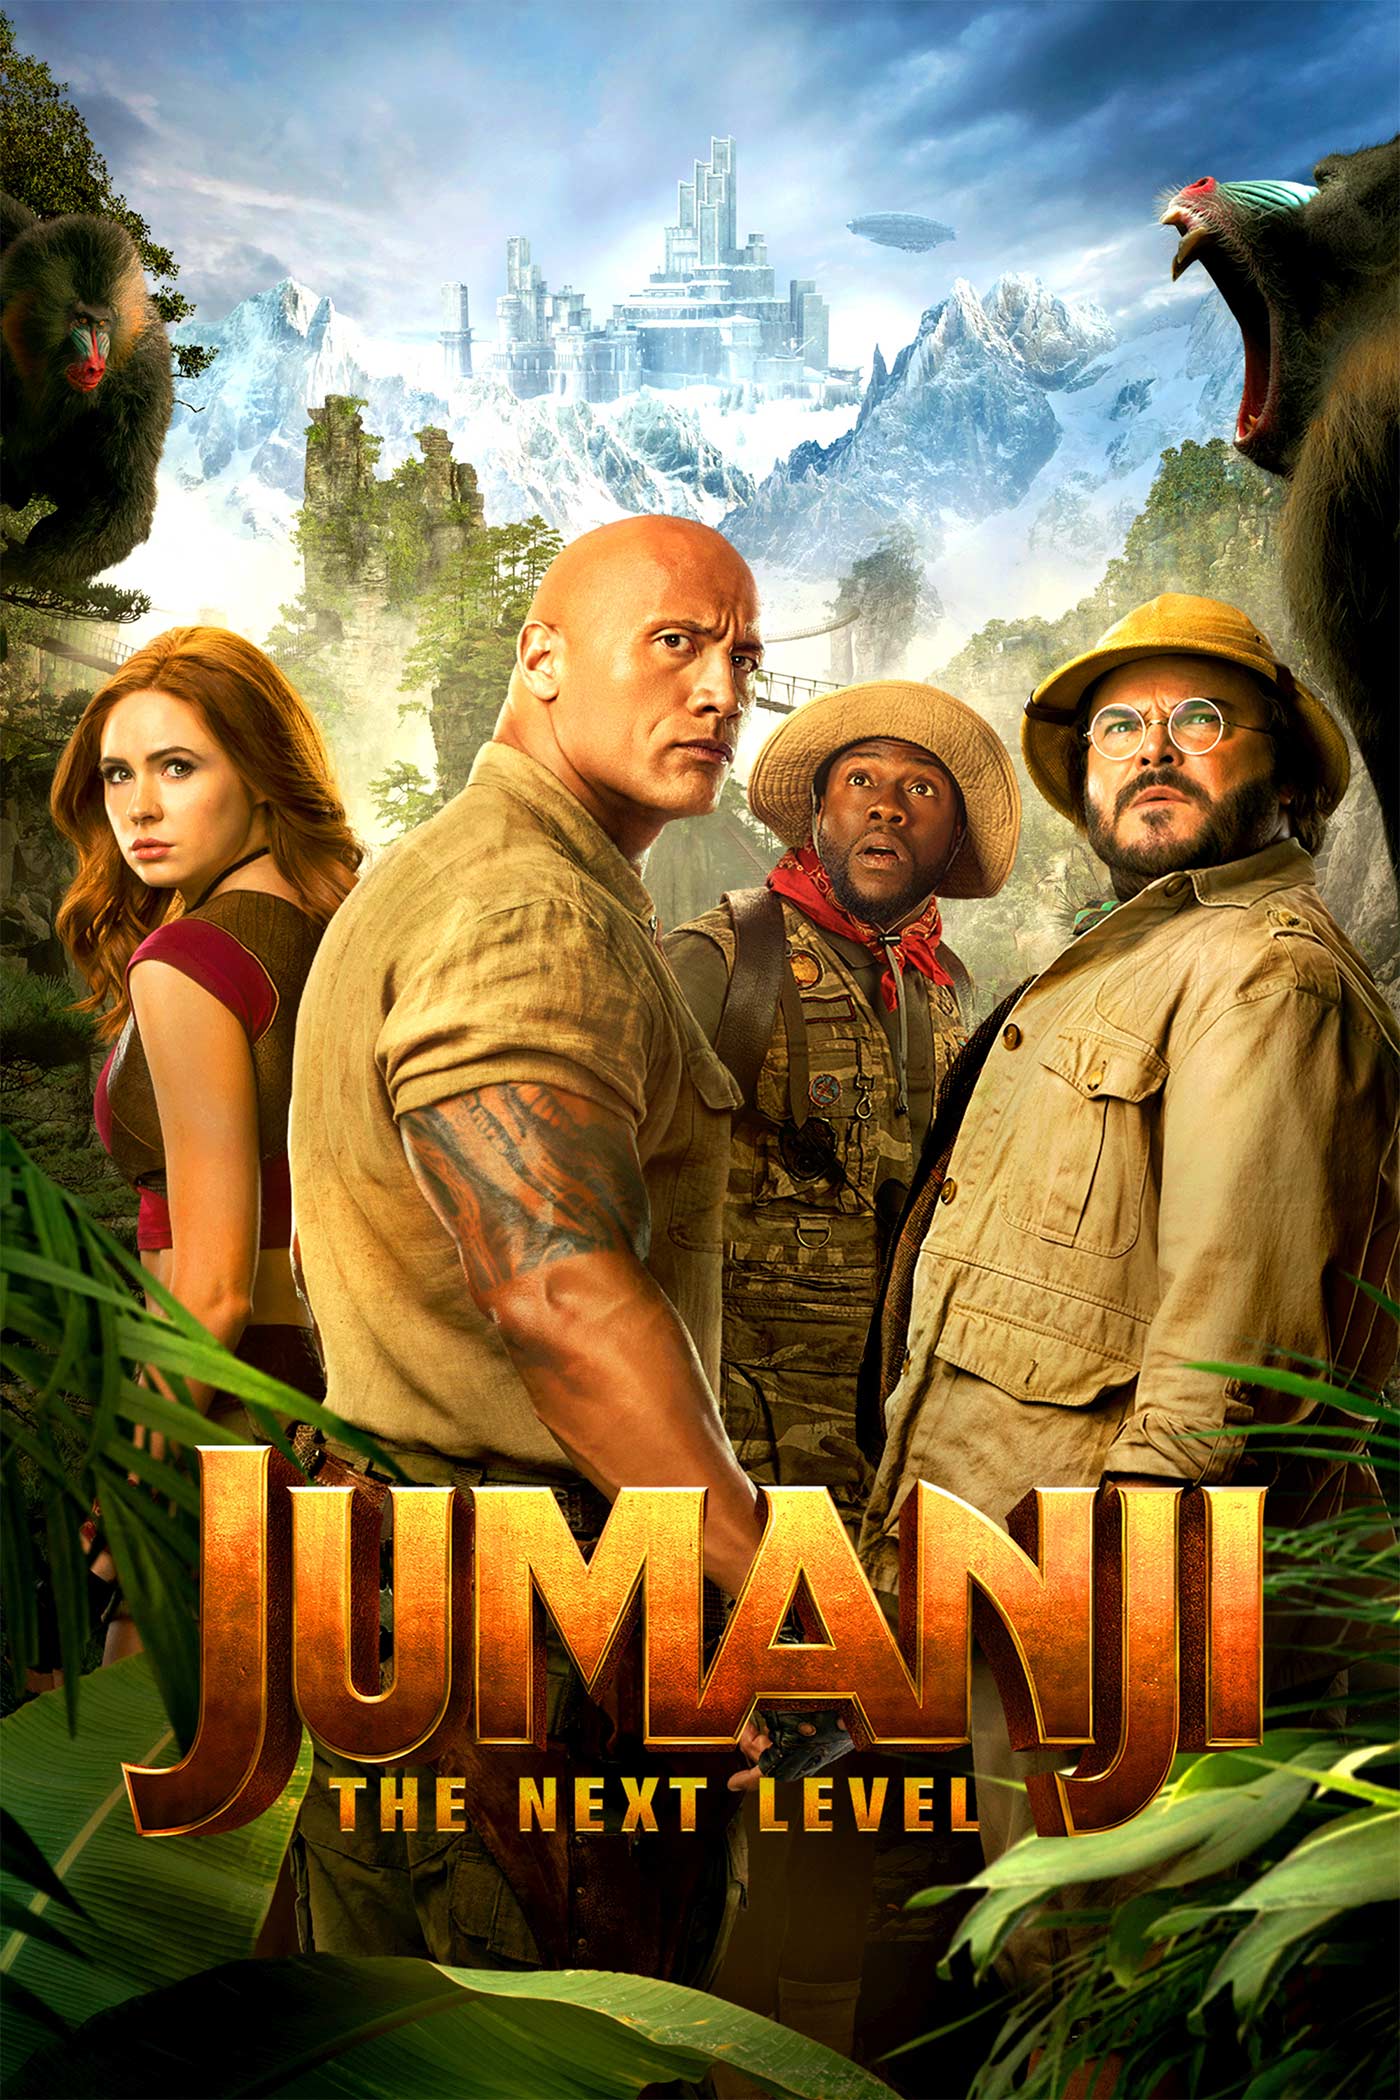 jumanji 2 hindi dubbed movie download